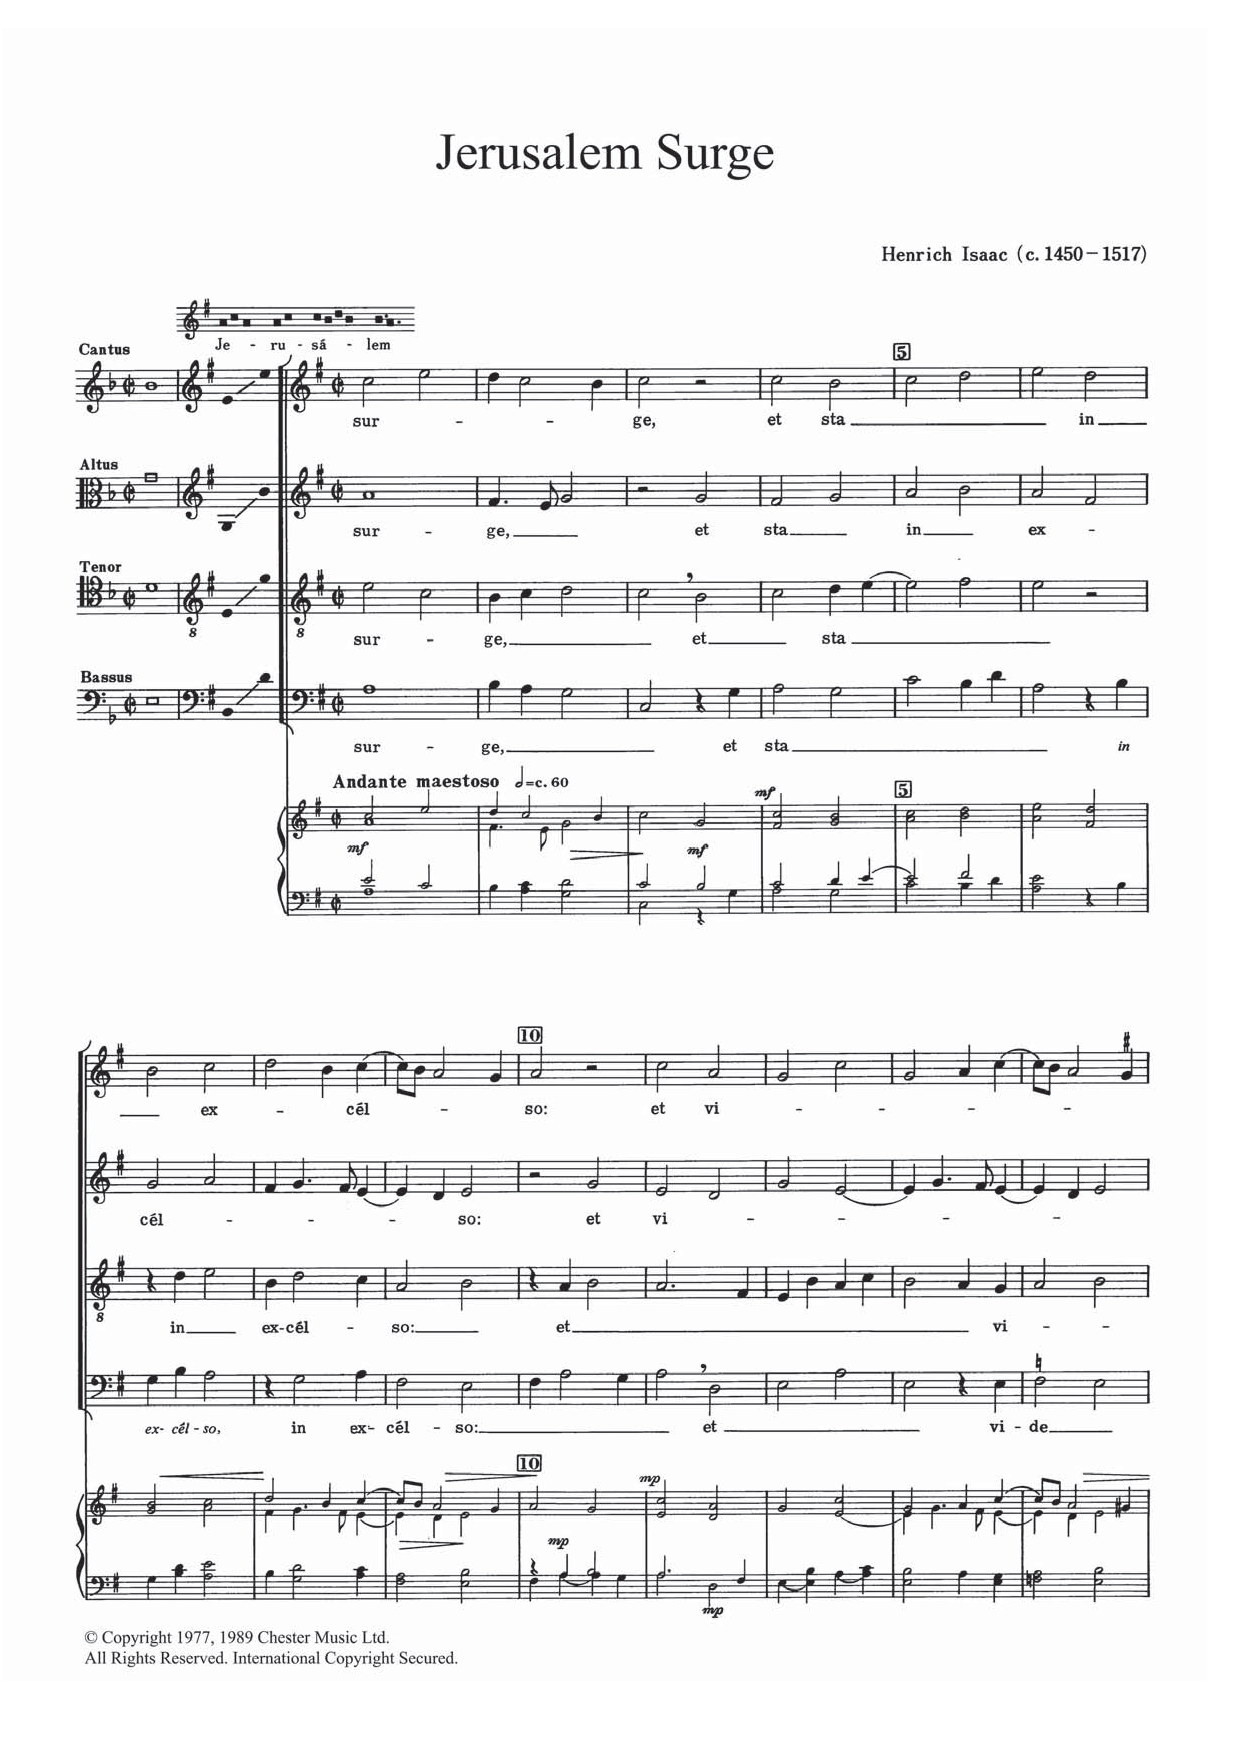 Heinrich Isaac Jerusalem Surge sheet music notes and chords arranged for SATB Choir